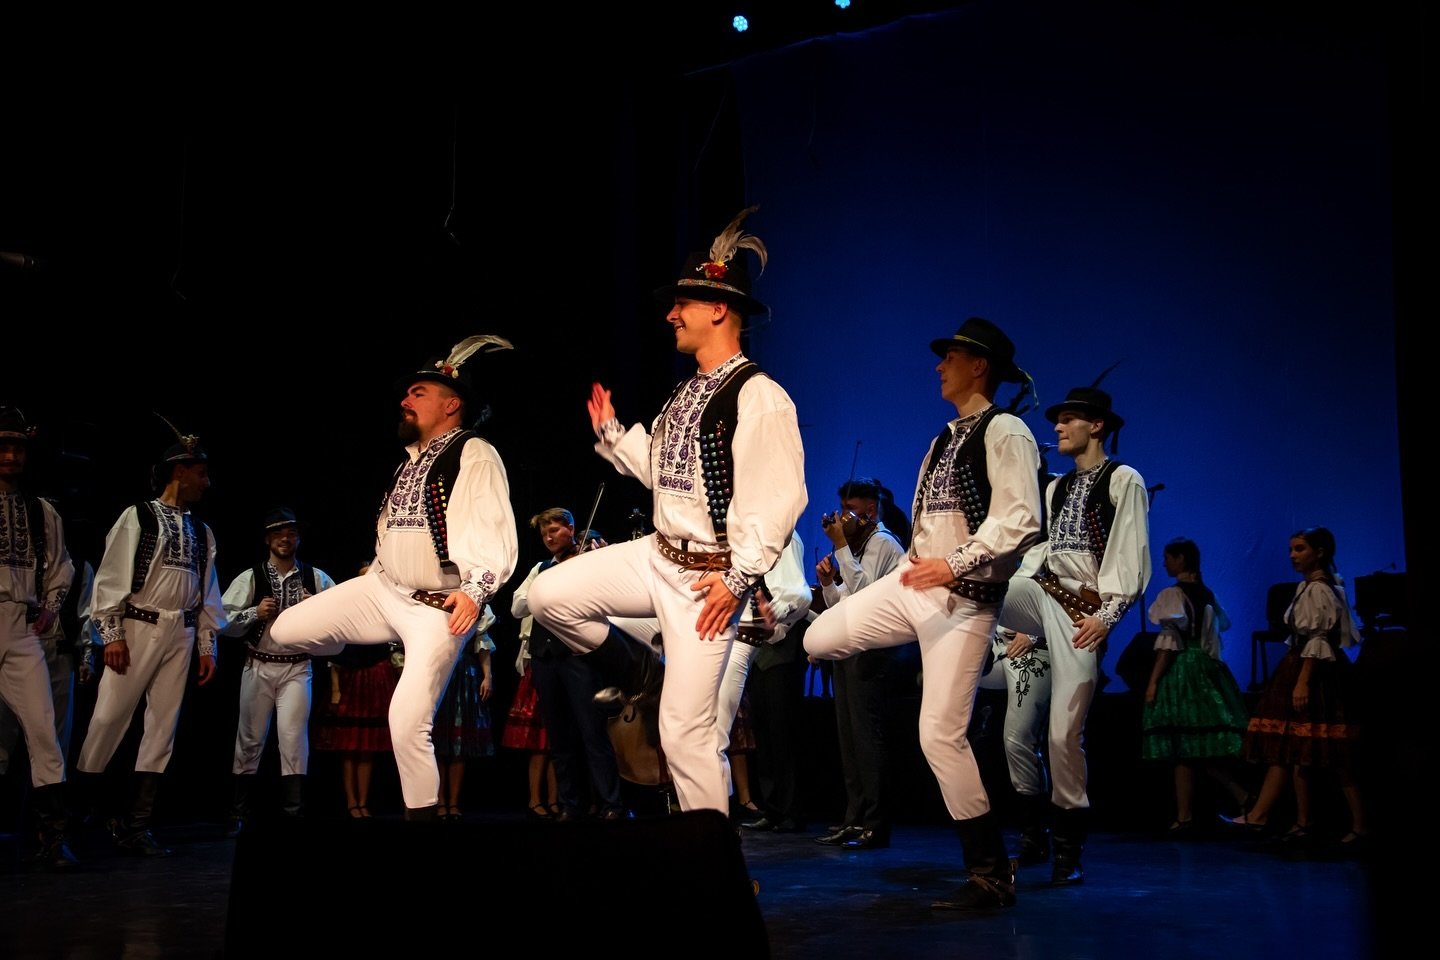 🎻
.
.
.
.
#fsvrsatec #vrsatec #anniversary #folklor #dubnica #mestodubnica #dubnicanadvahom #slovakfolklore #telgart #kroj #nasfolklor #vkroji #folklore #dance #dancing #myjava #turna #fsskdubnicka #hrochot #poniky #telgart #zamutov @nasfolklor @pra